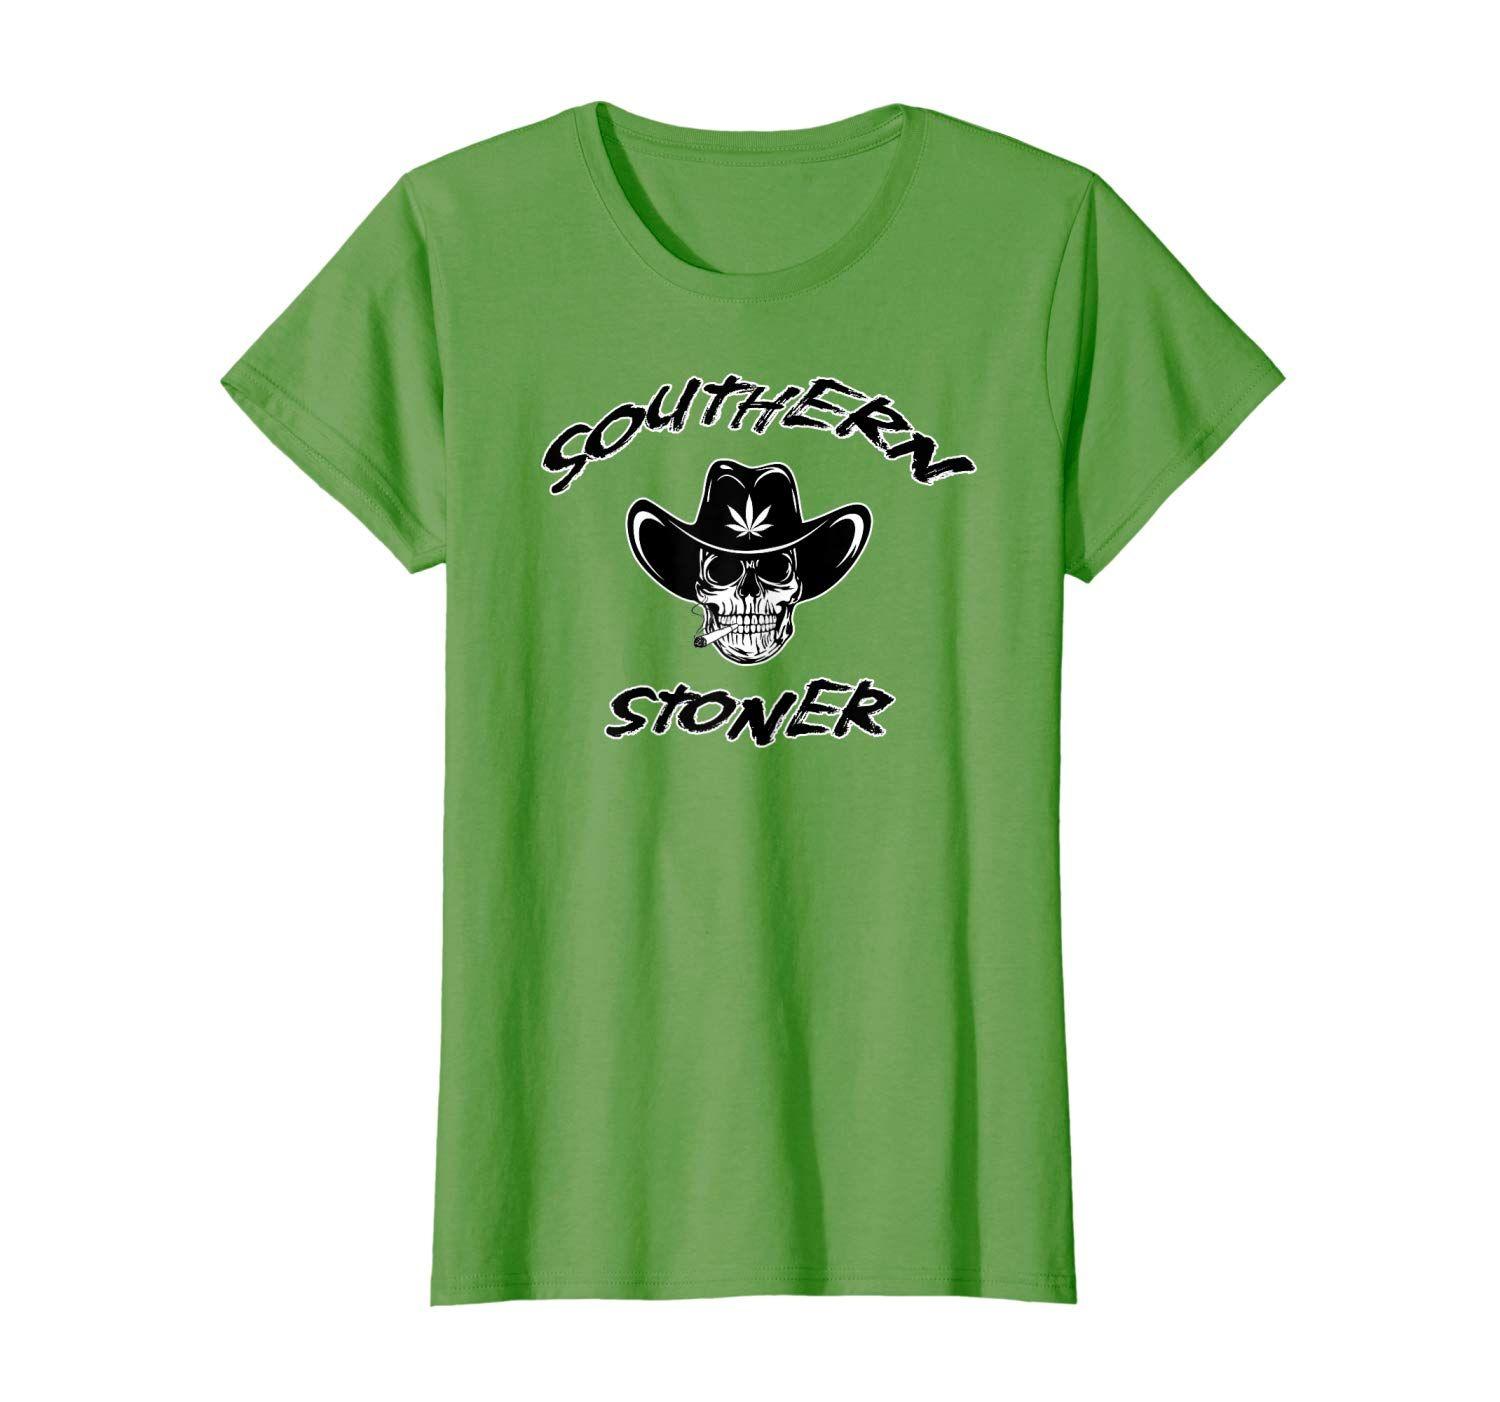 Stoner Logo - Amazon.com: Southern Stoner Logo T Shirt with Skull Cowboy Smoking ...